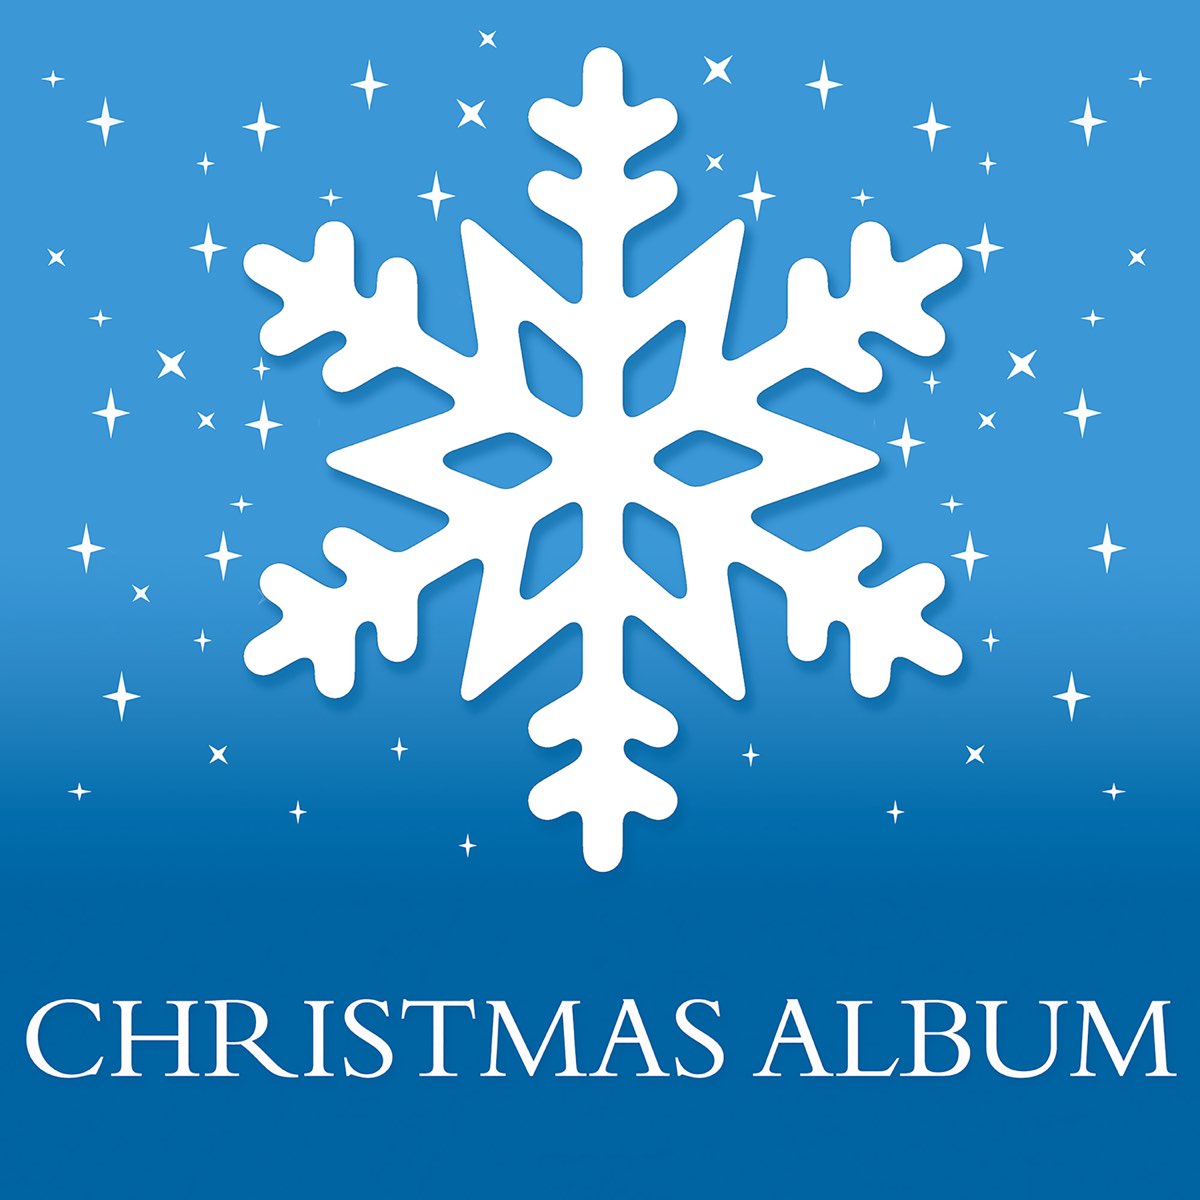 ‎Christmas Album - Album by Various Artists - Apple Music